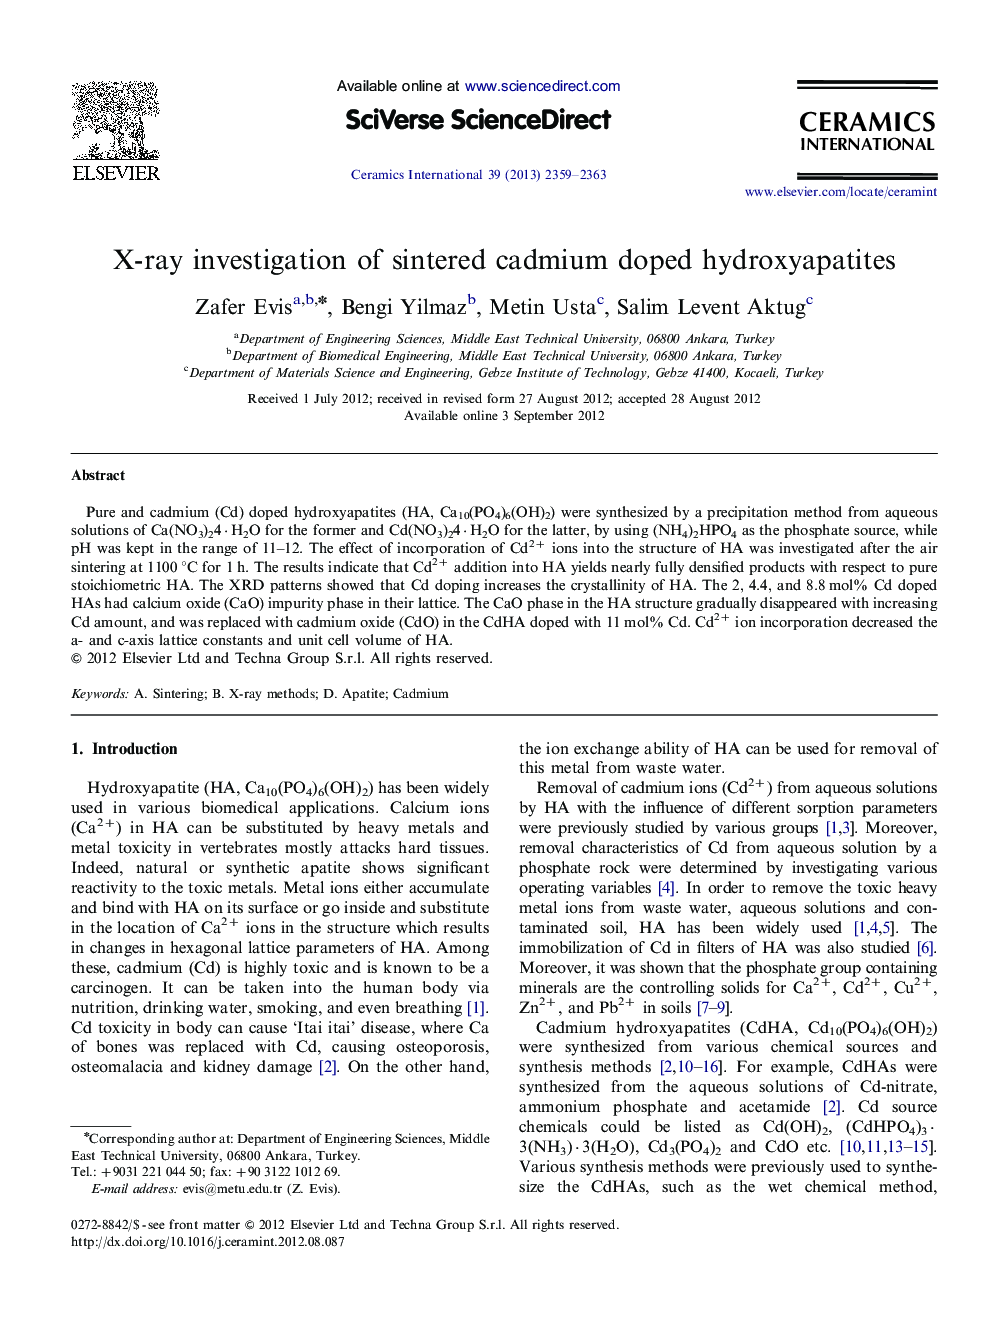 X-ray investigation of sintered cadmium doped hydroxyapatites